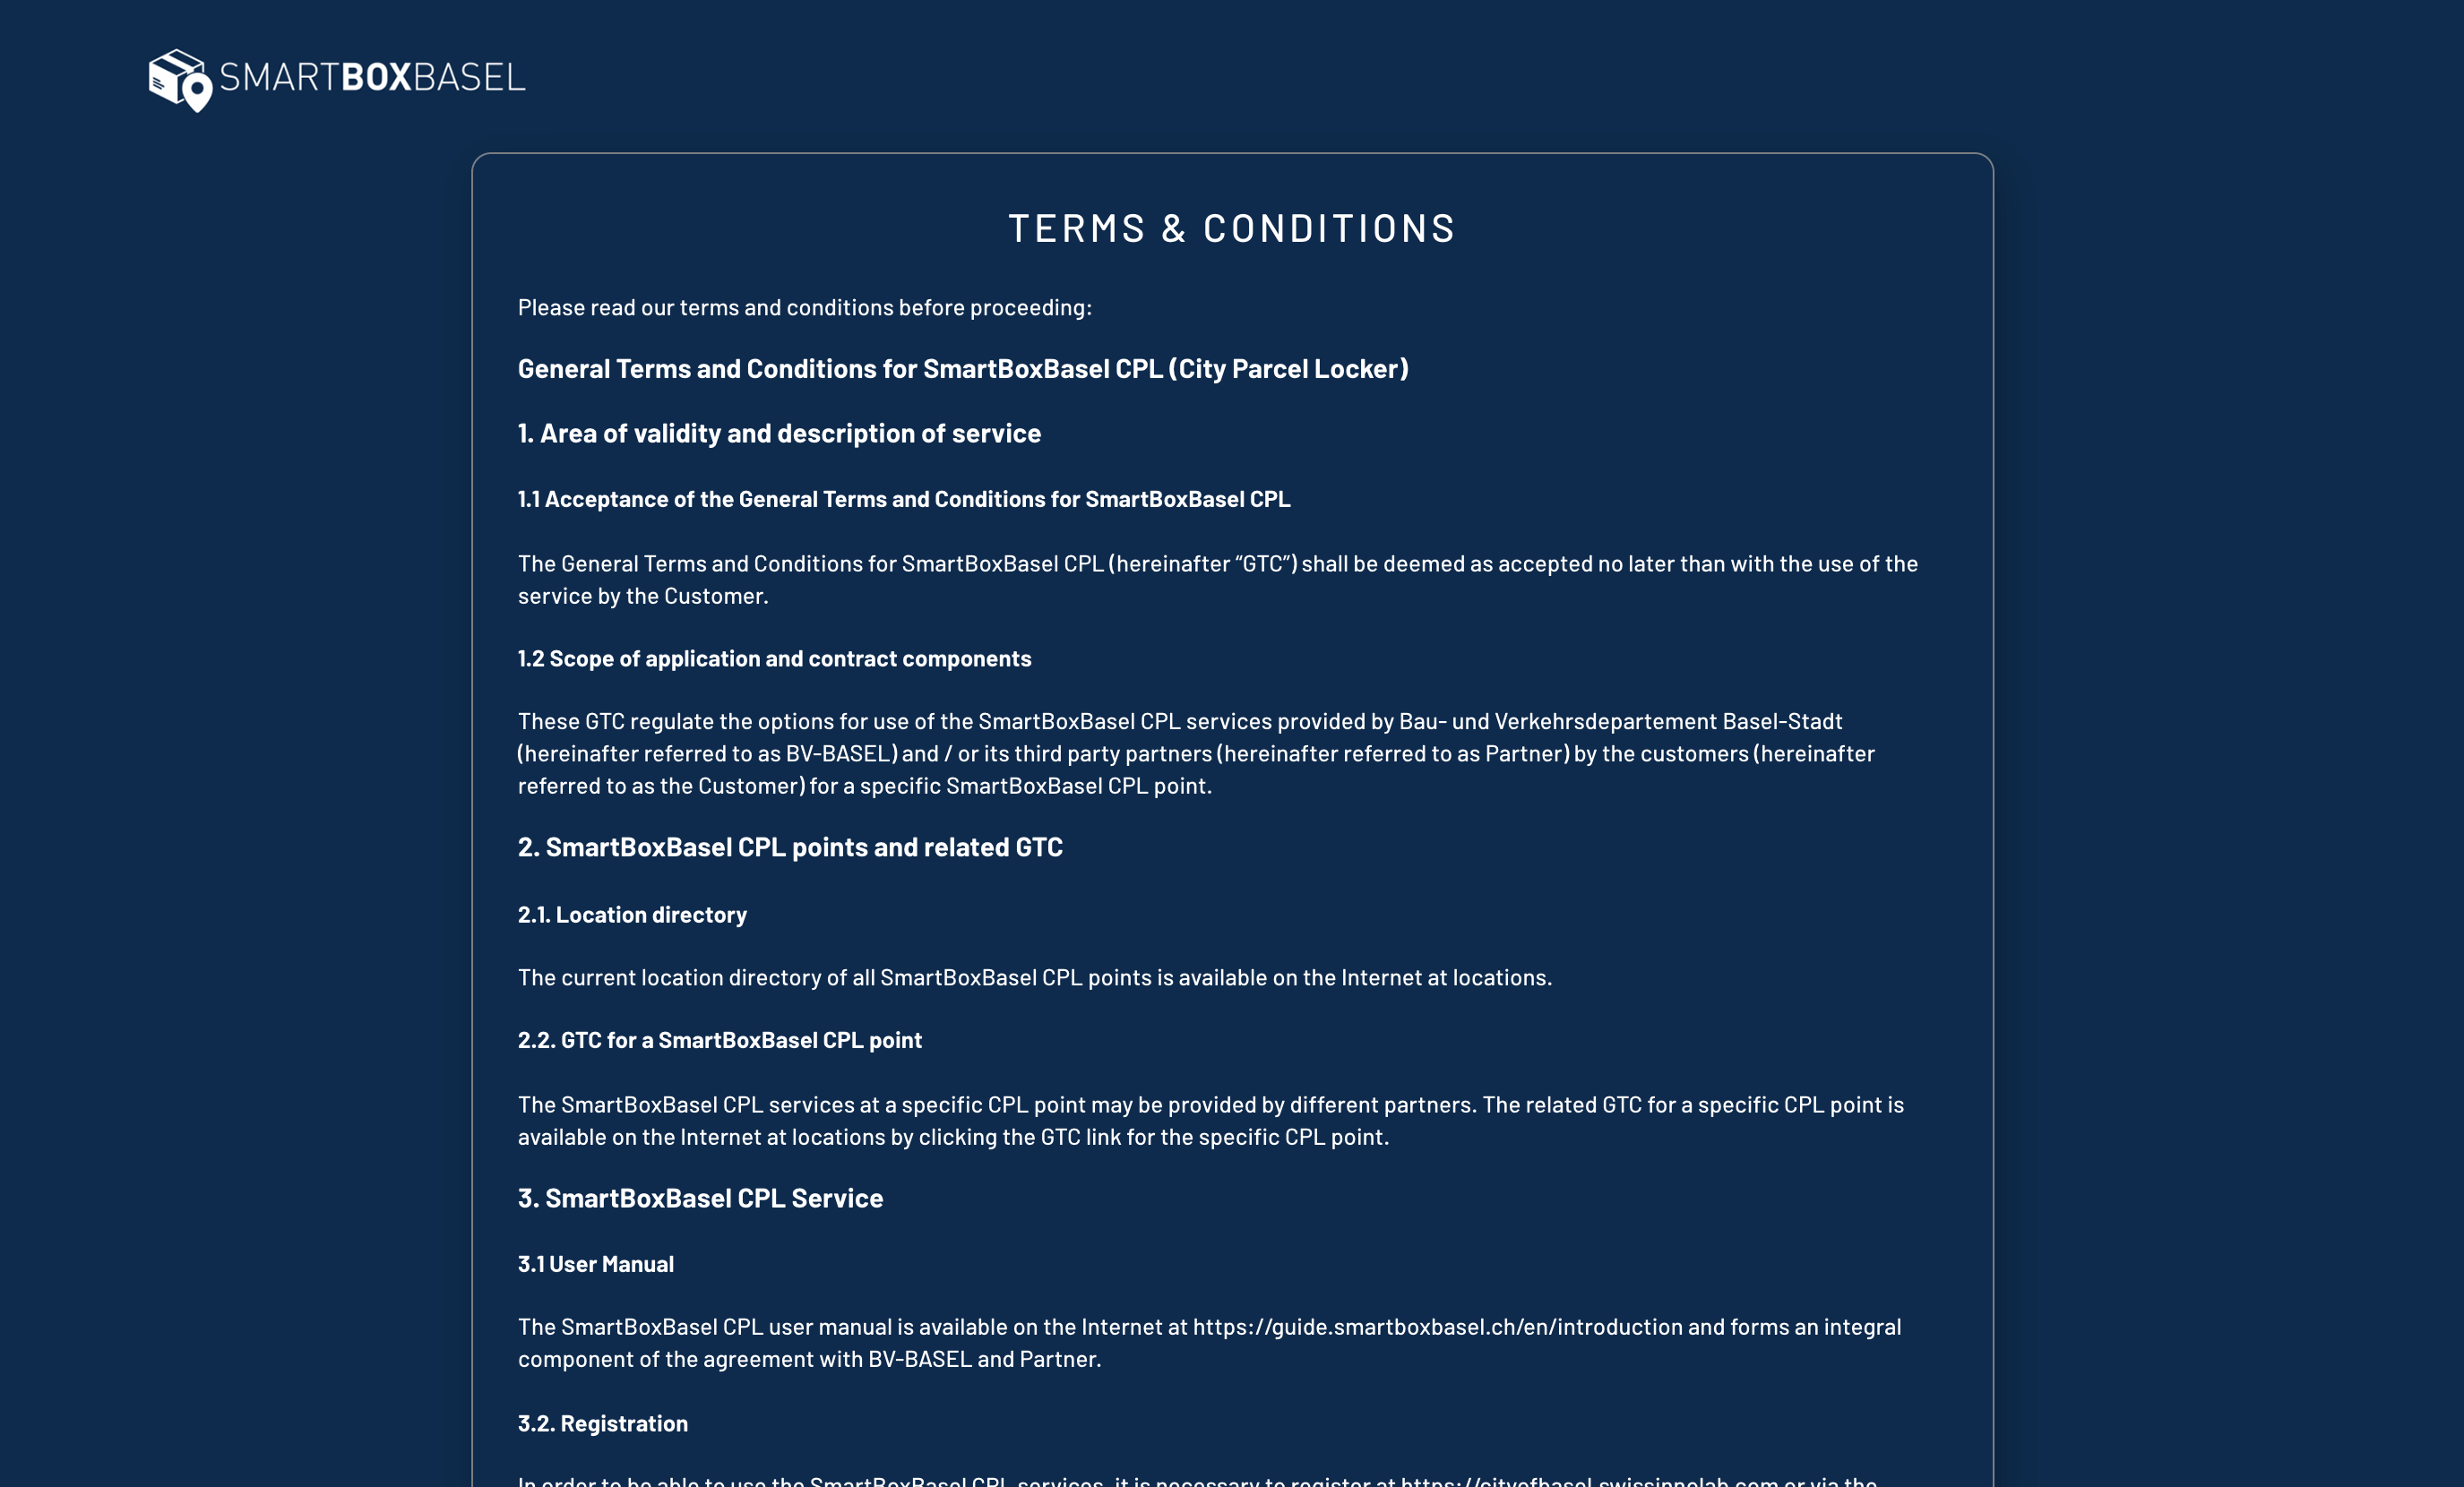 Web portal terms & conditions